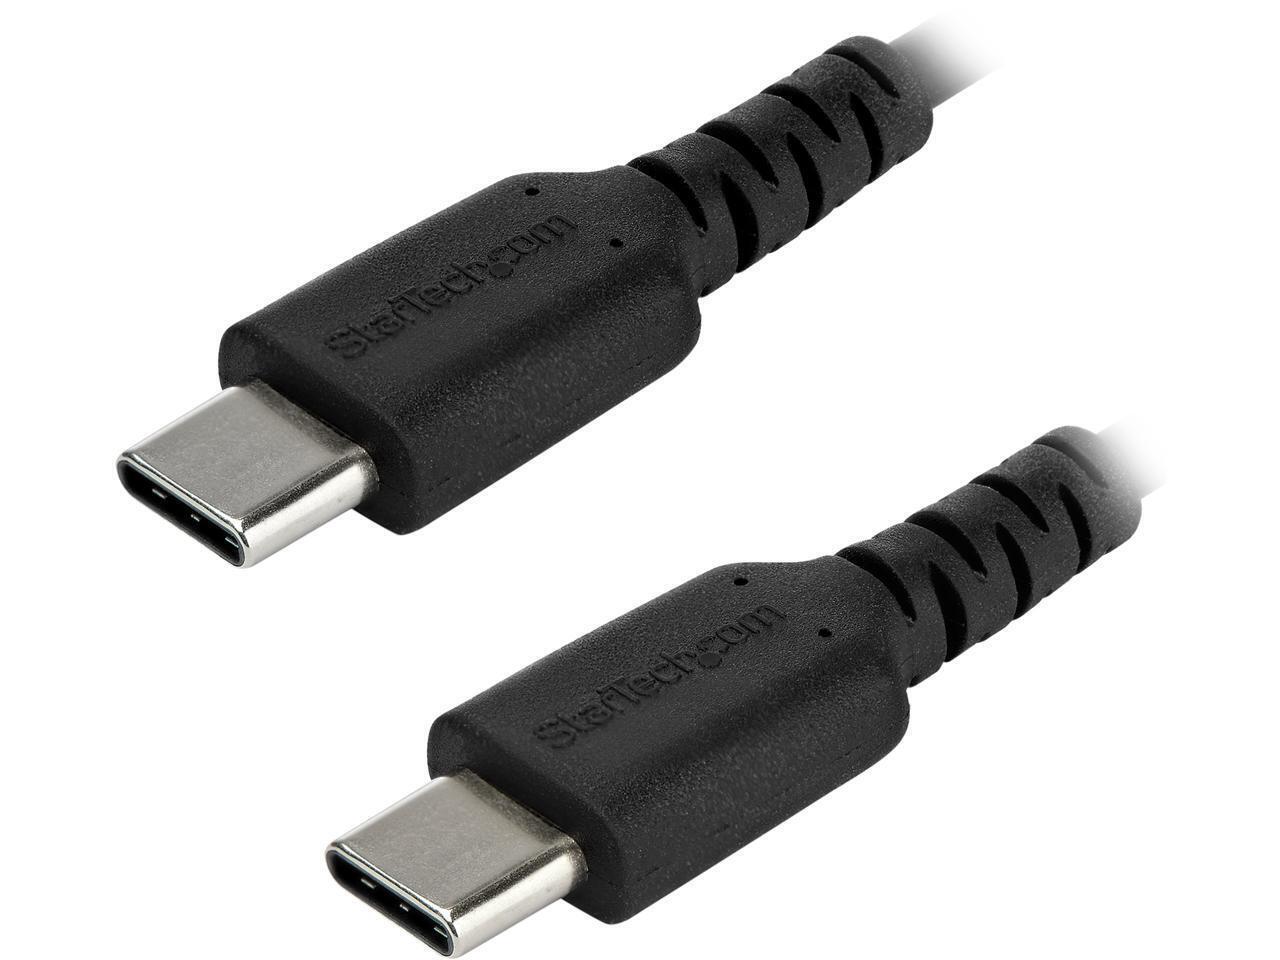 StarTech.com RUSB2CC1MB 1m (3.28 ft.) USB C Cable - Durable USB 2.0 Type C Cord